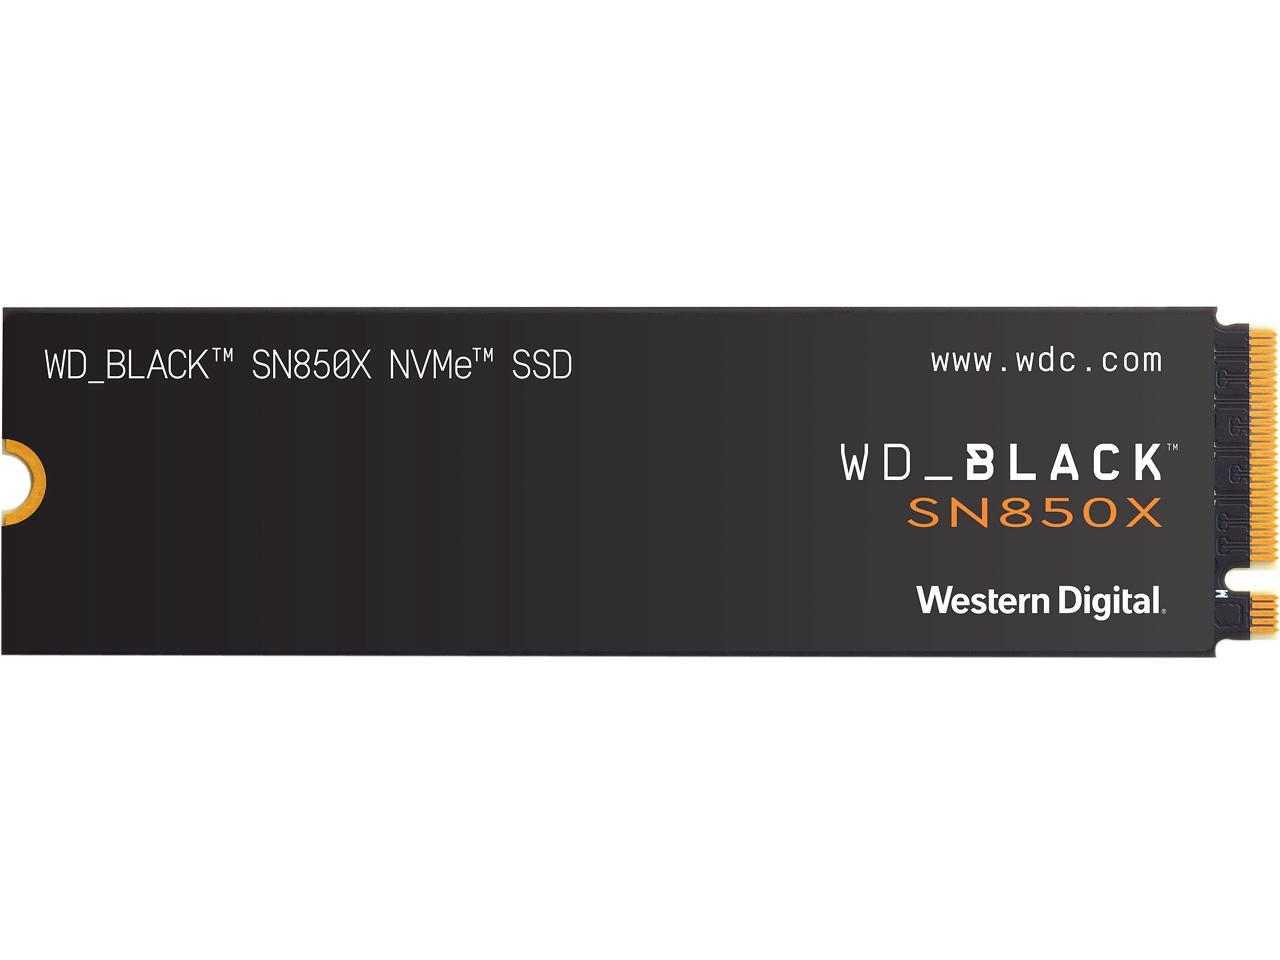 Hard disk ssd western digital wd black sn850x 4tb m.2 2280